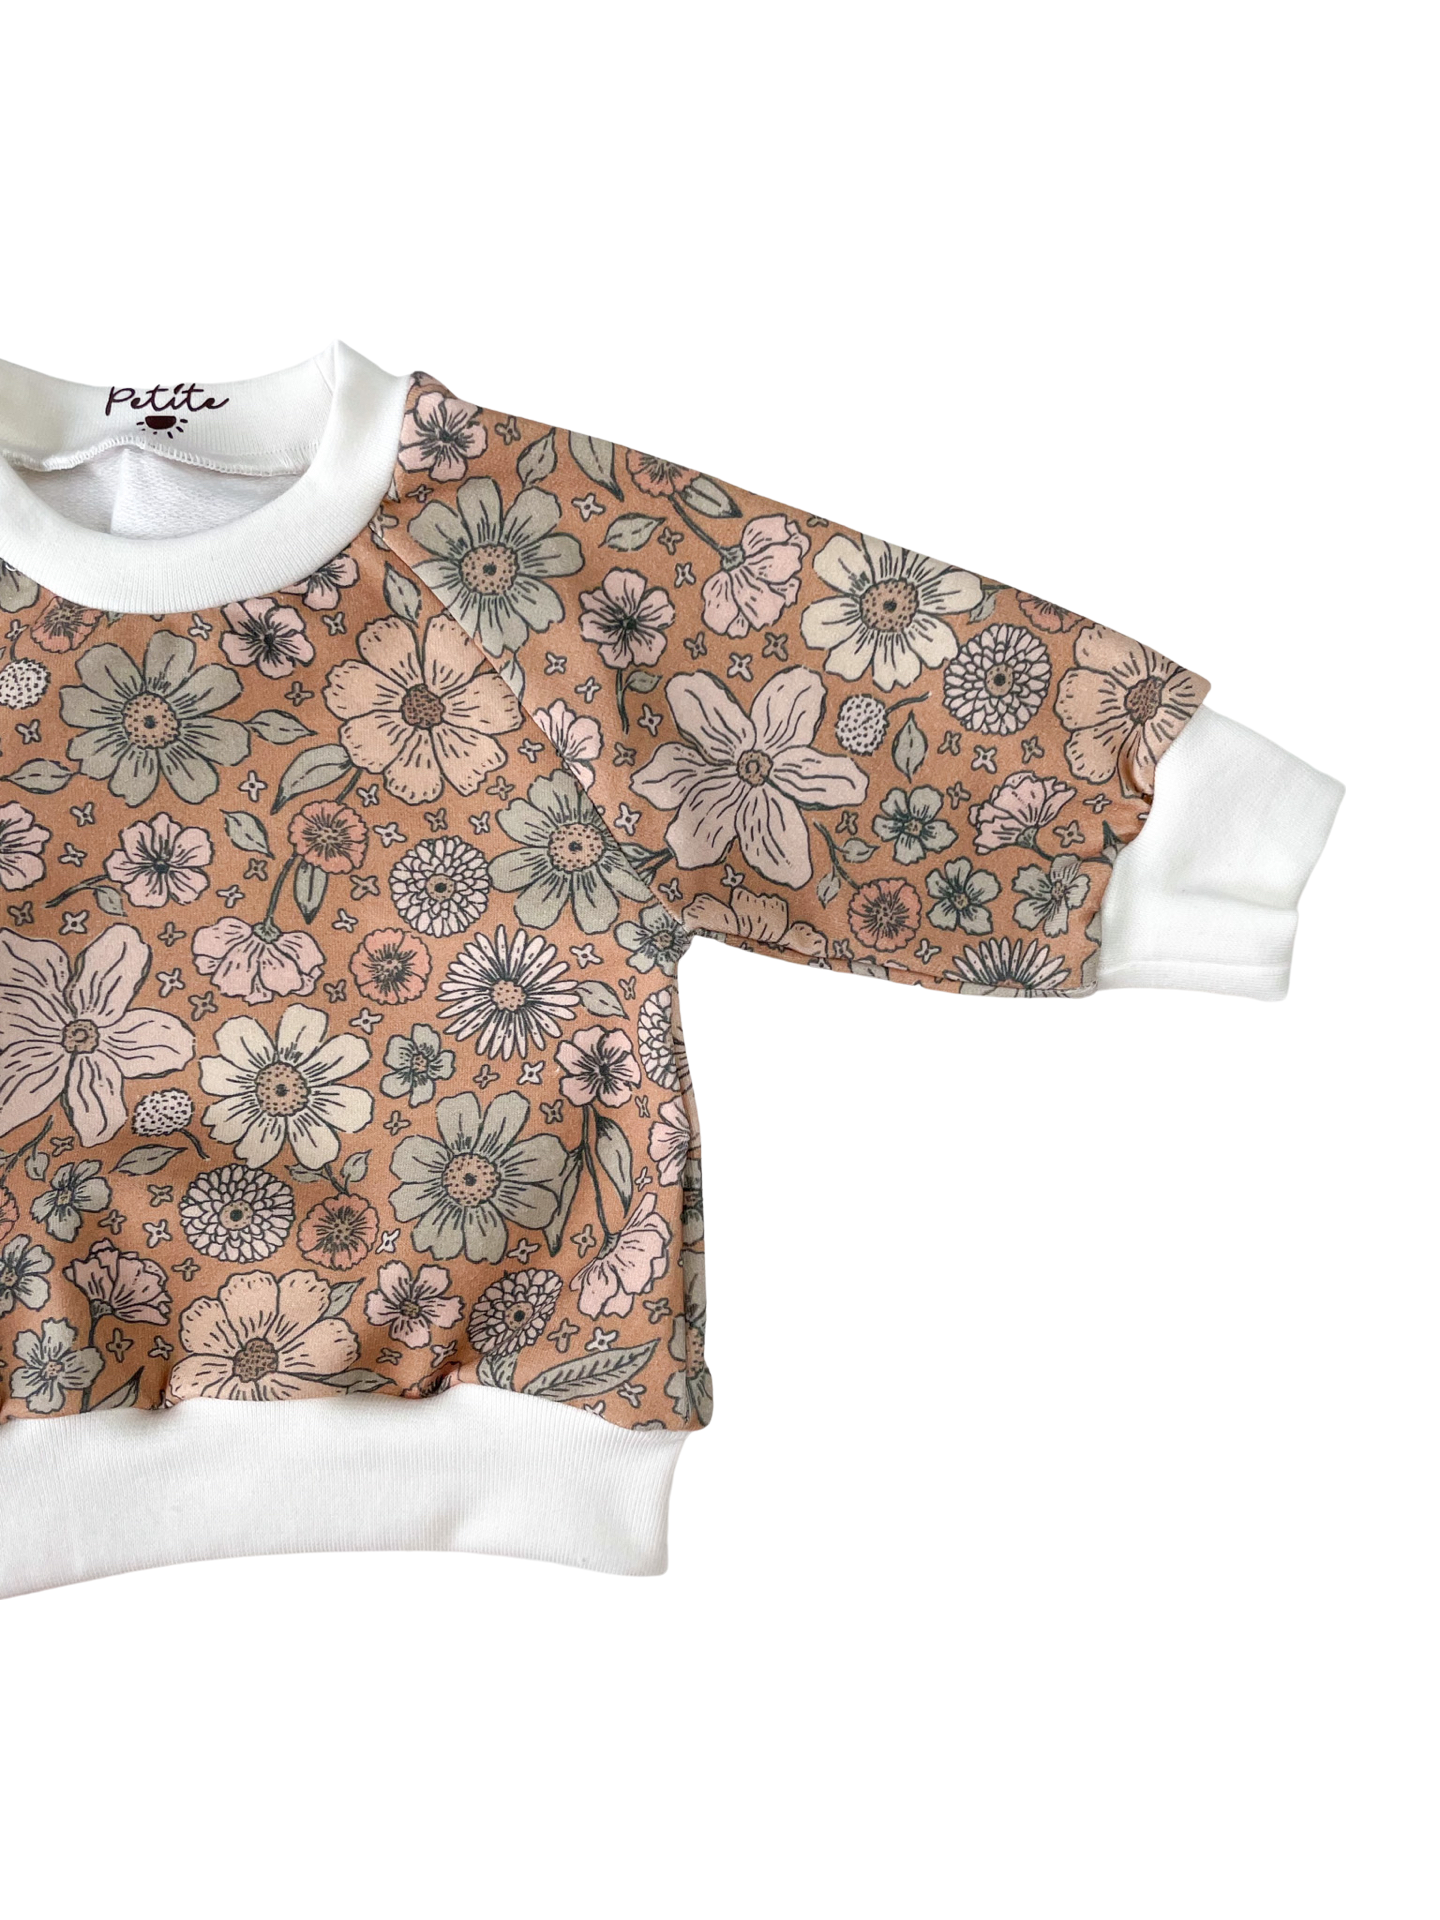 Baby cotton sweatshirt / bold floral - caramel